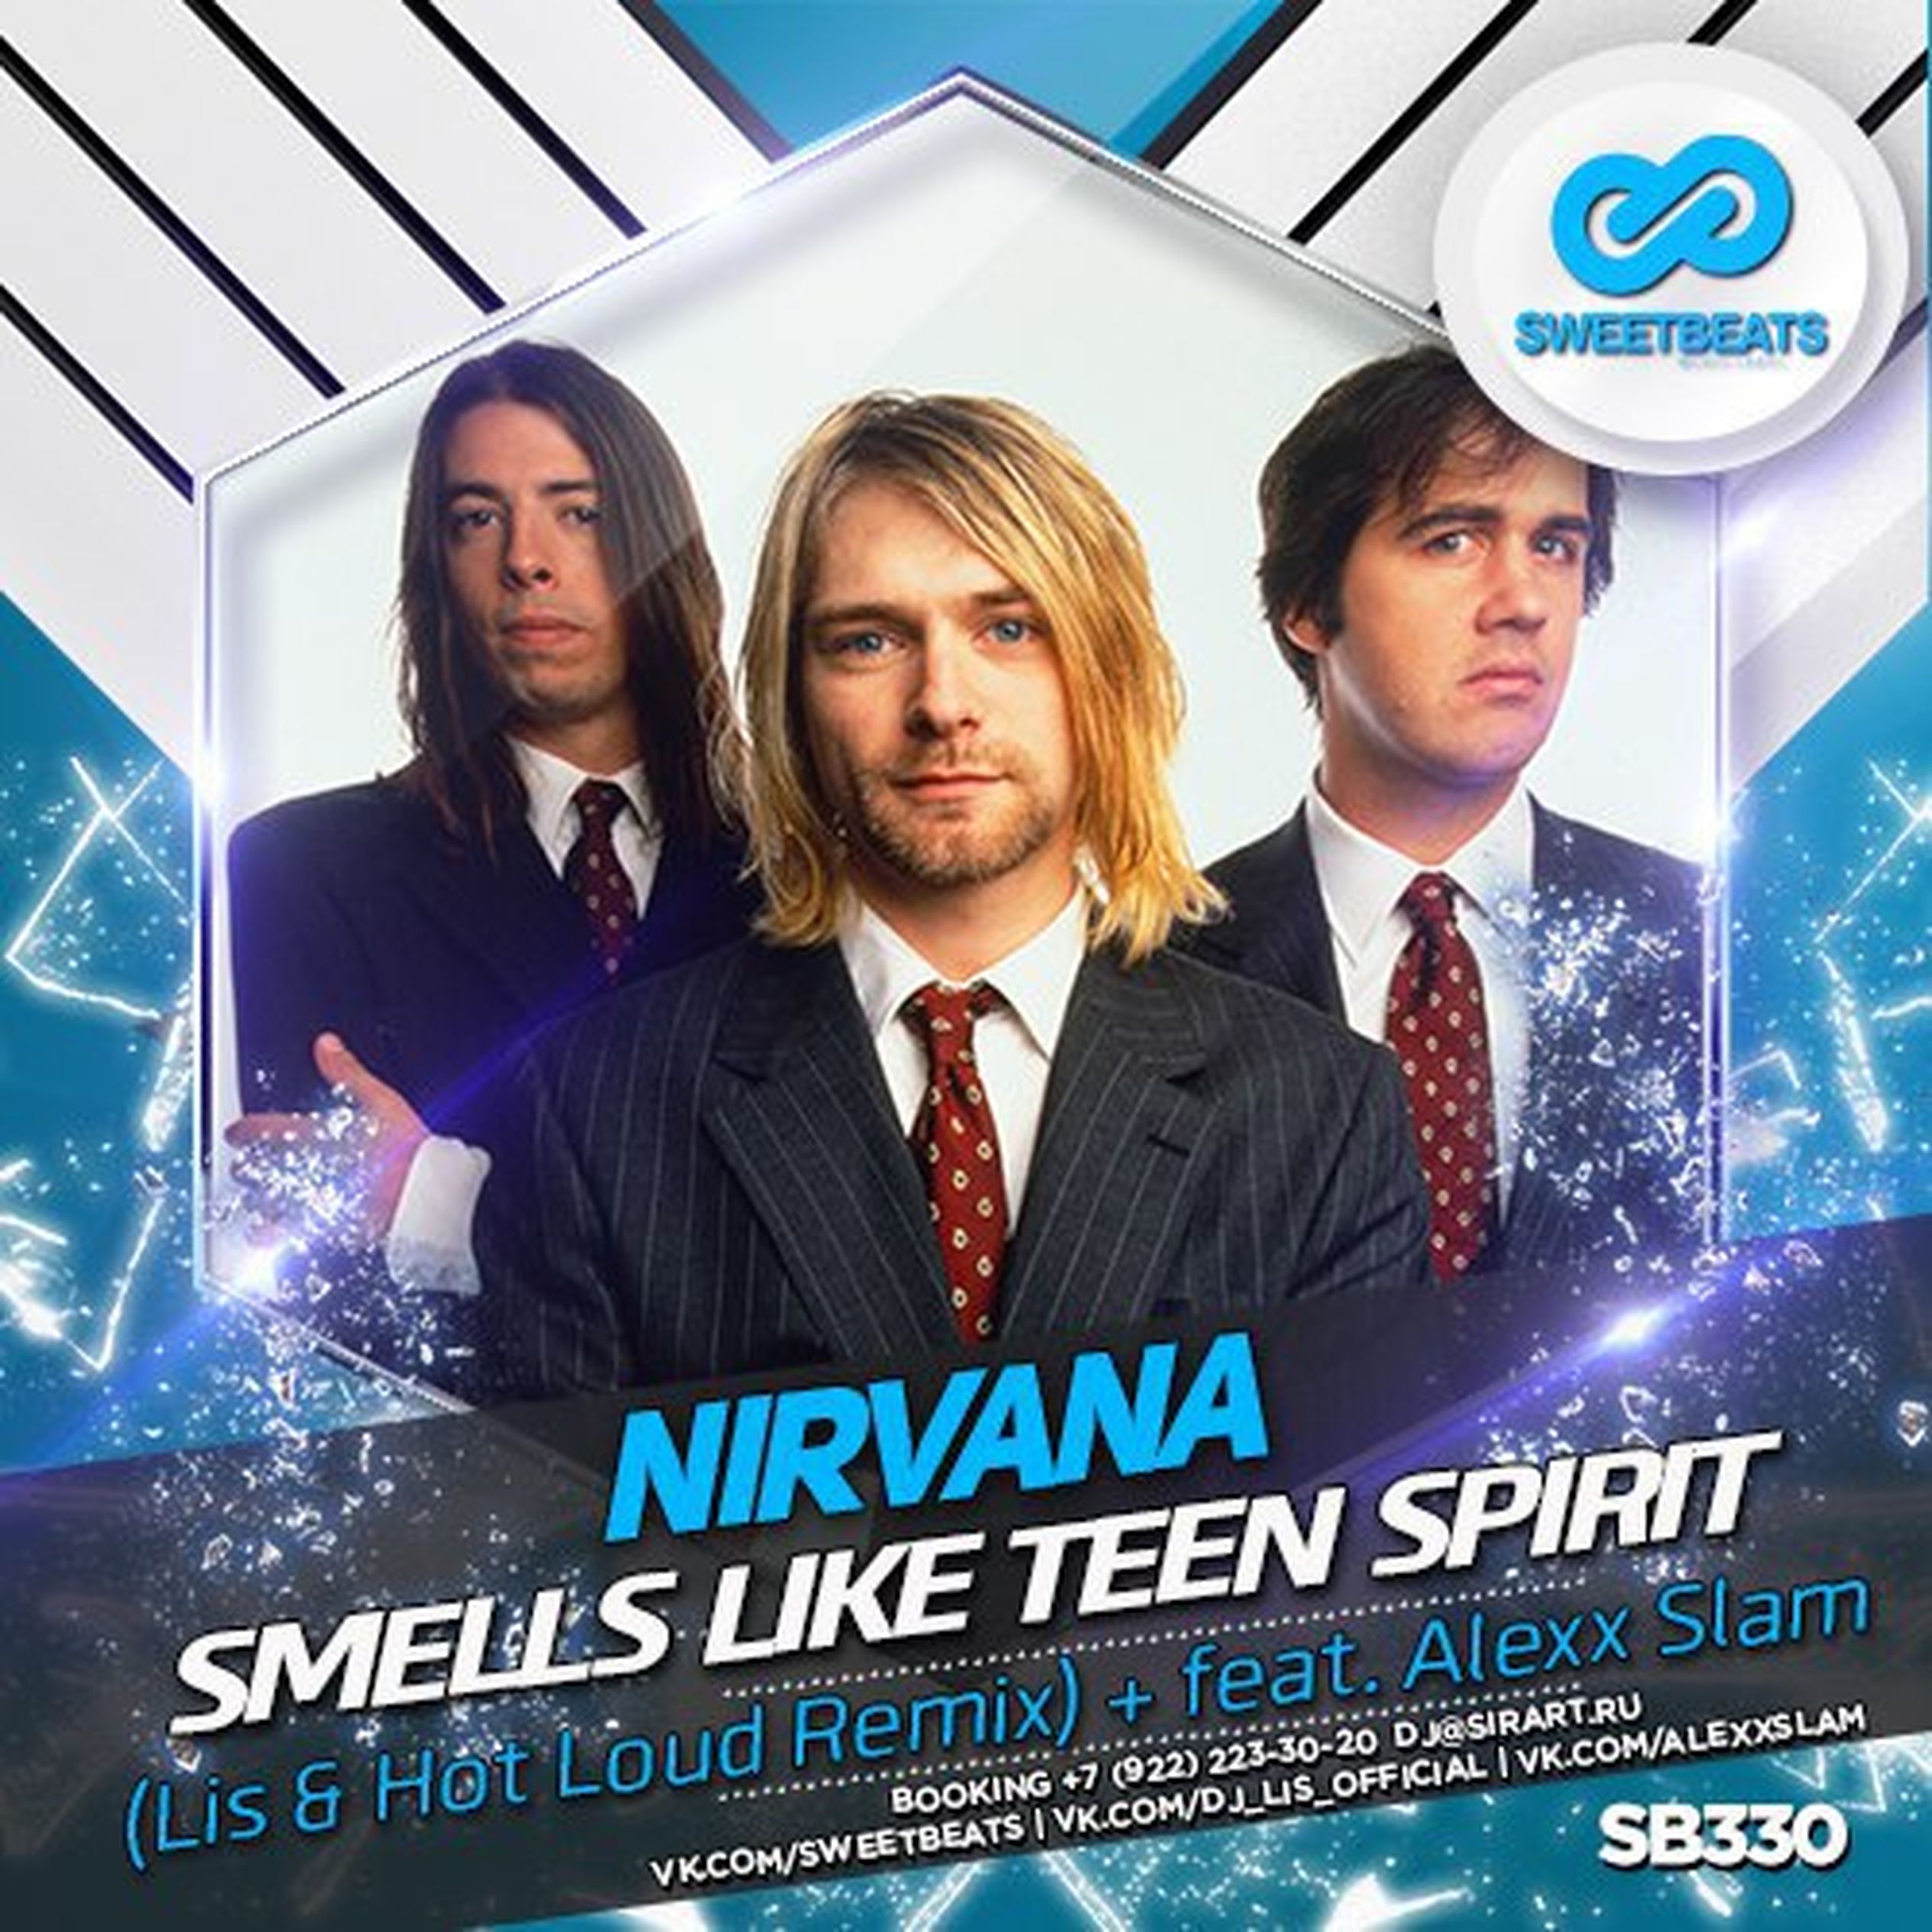 Песня nirvana like teen spirit. Nirvana Spirit. Нирвана teen Spirit. Nirvana smells like teen Spirit. Нирвана smells like teen Spirit.